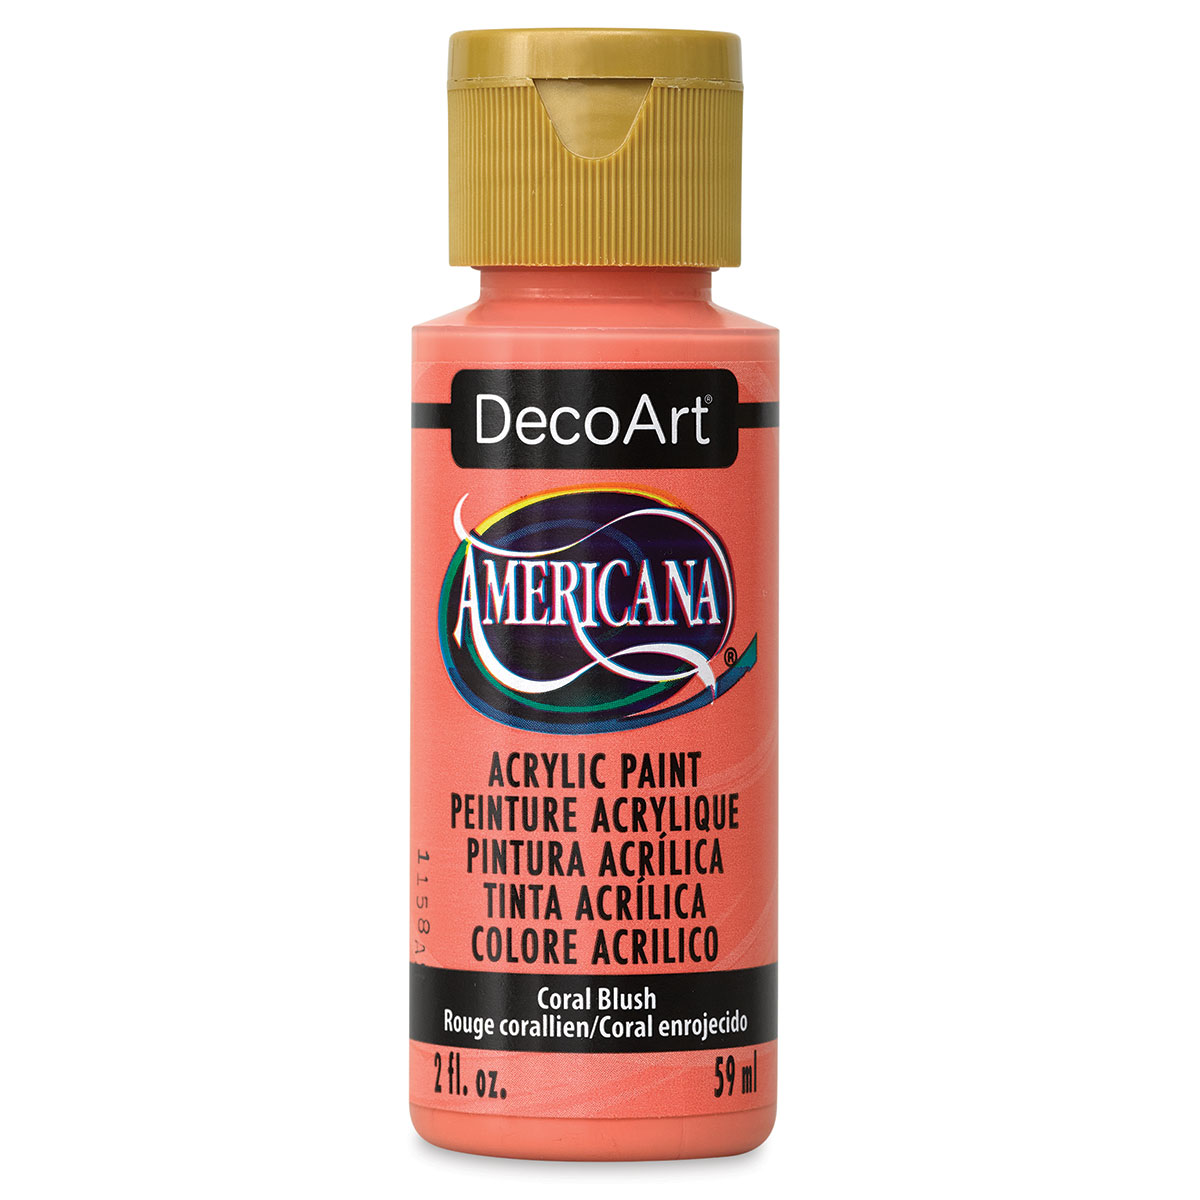 DecoArt Americana Acrylic Paint ~ Coral Blush